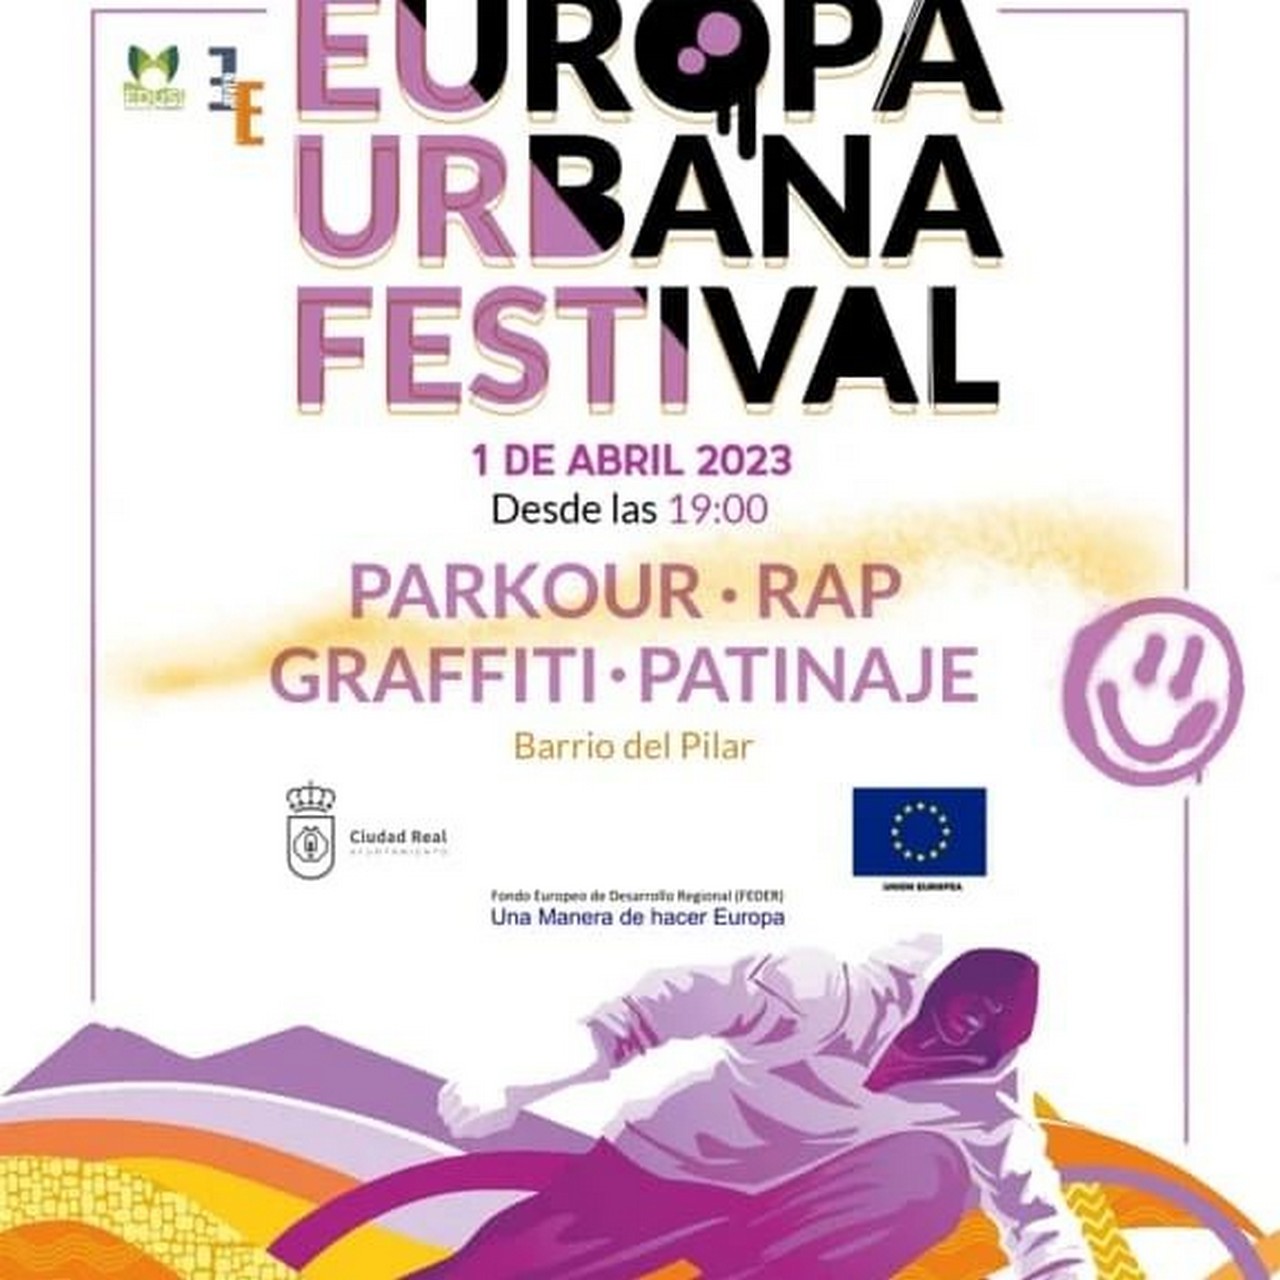 Europa urbana festival